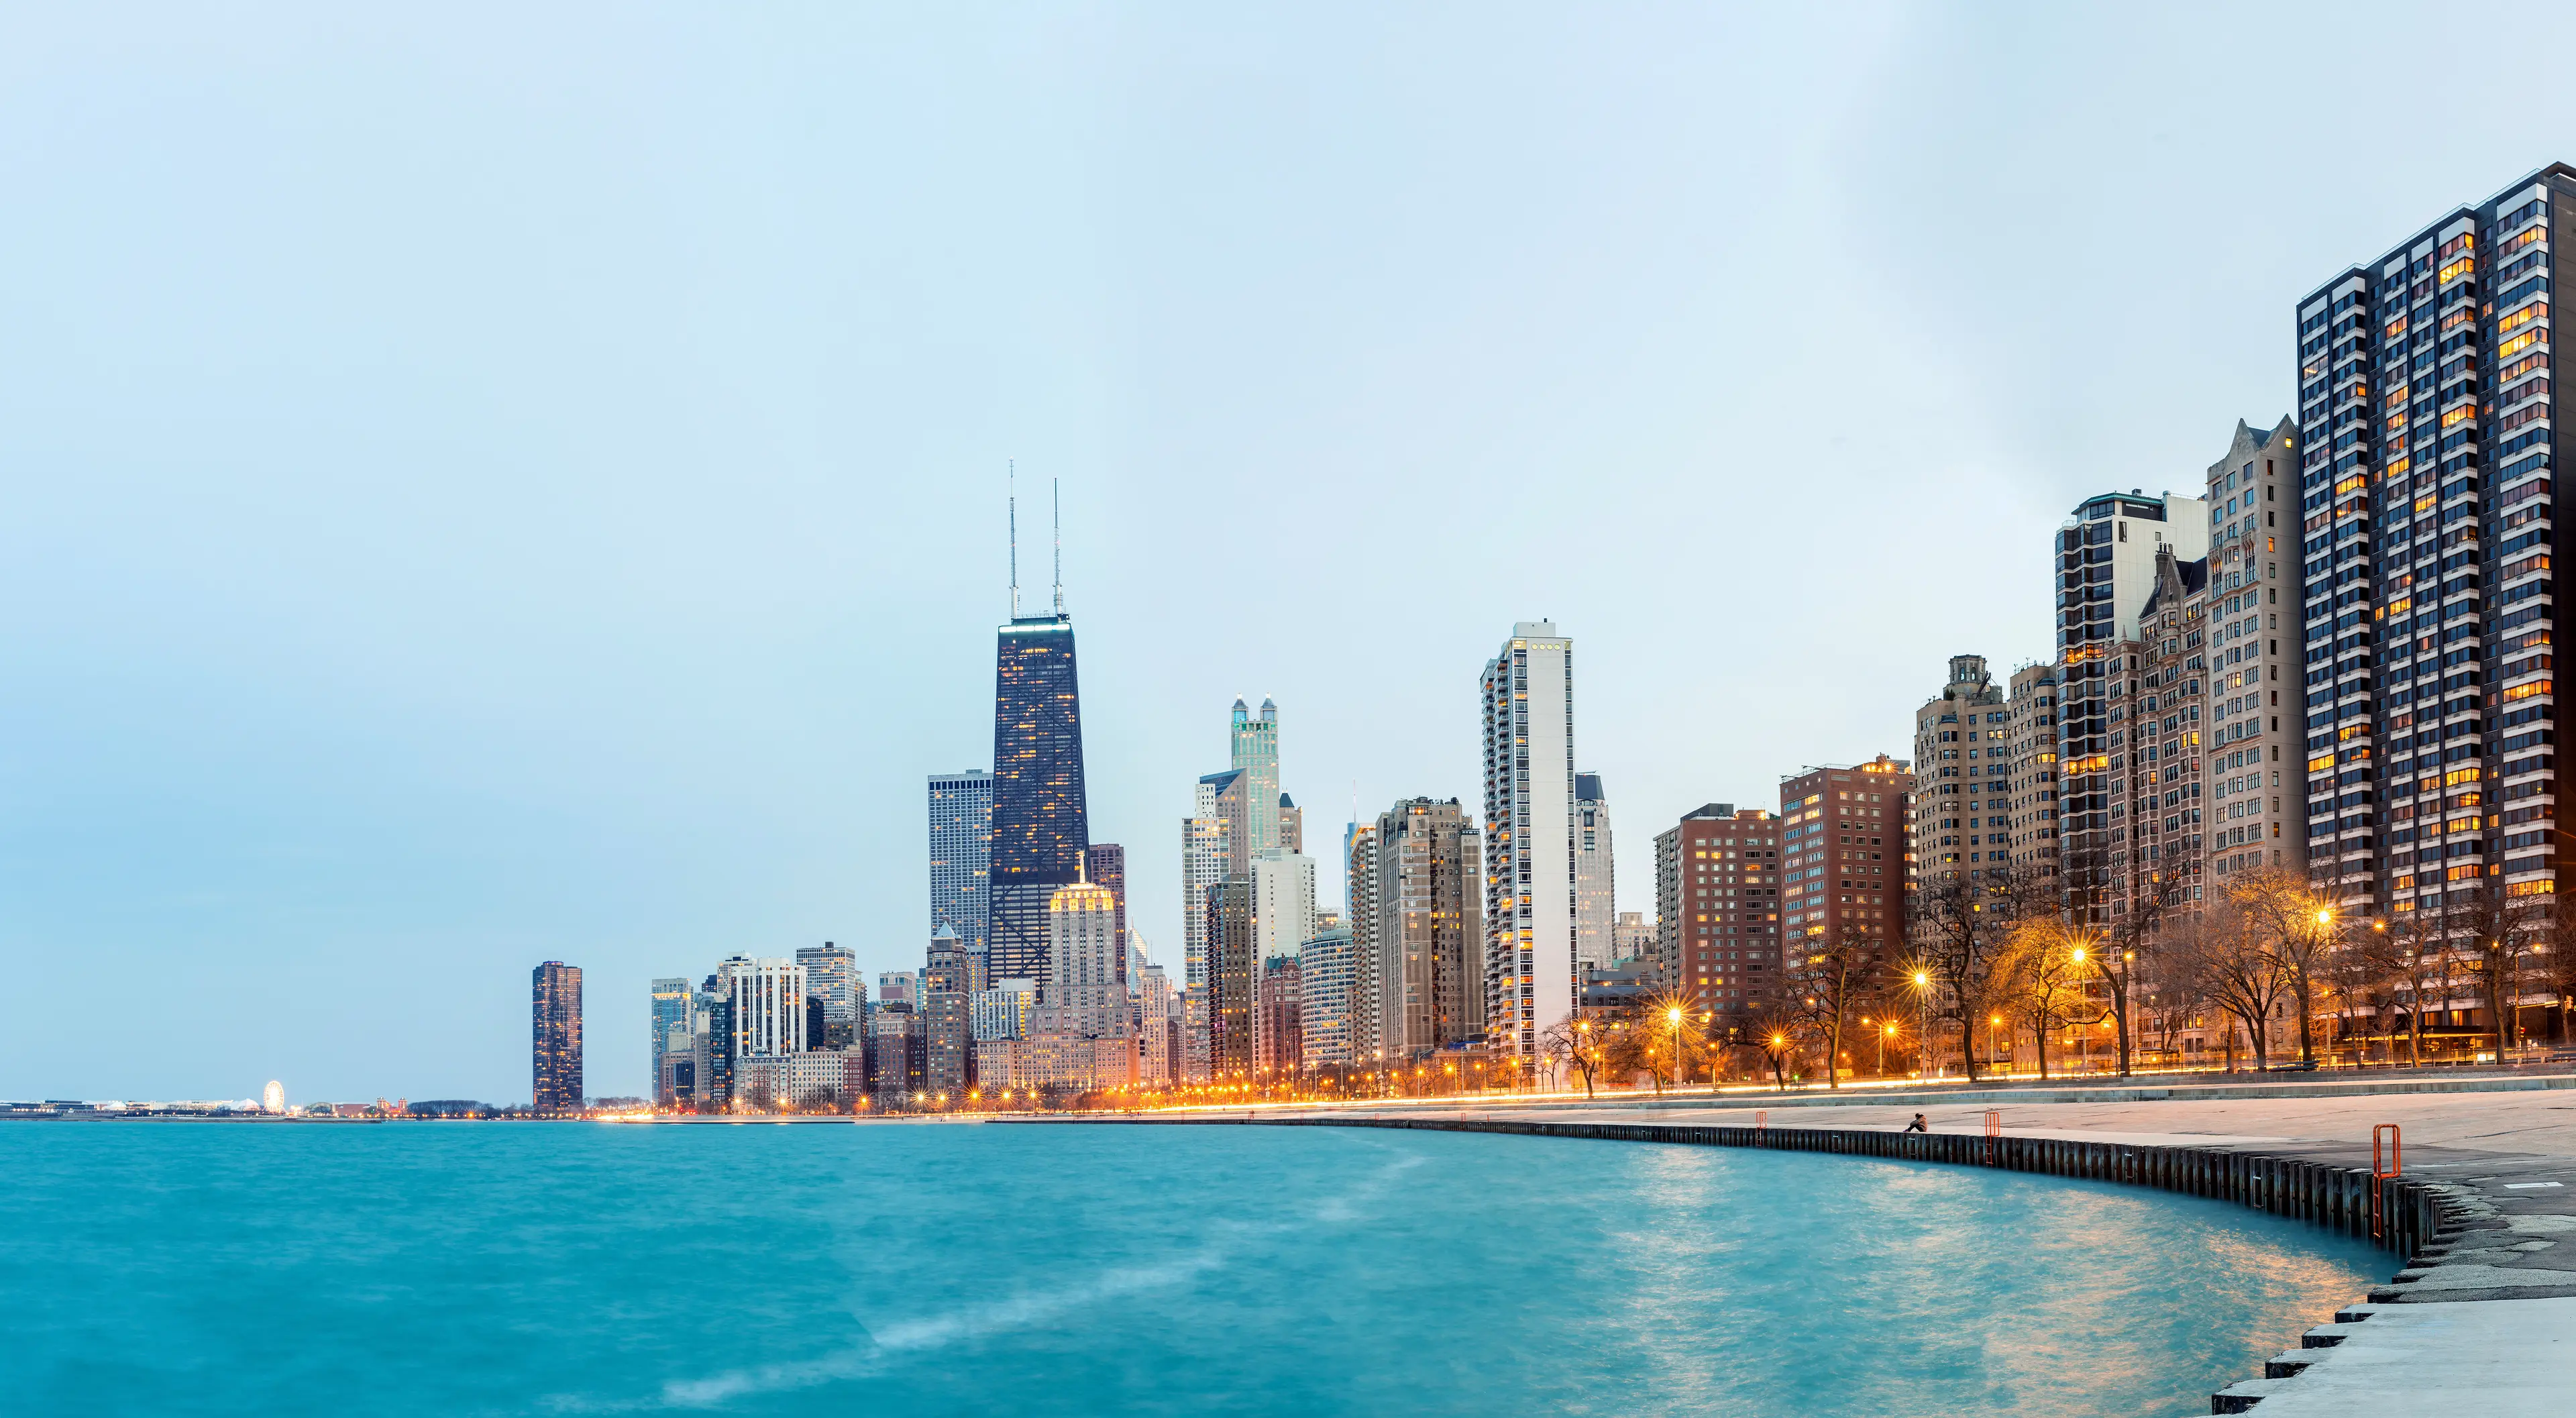 Explore Chicago, Illinois in One Amazing Day